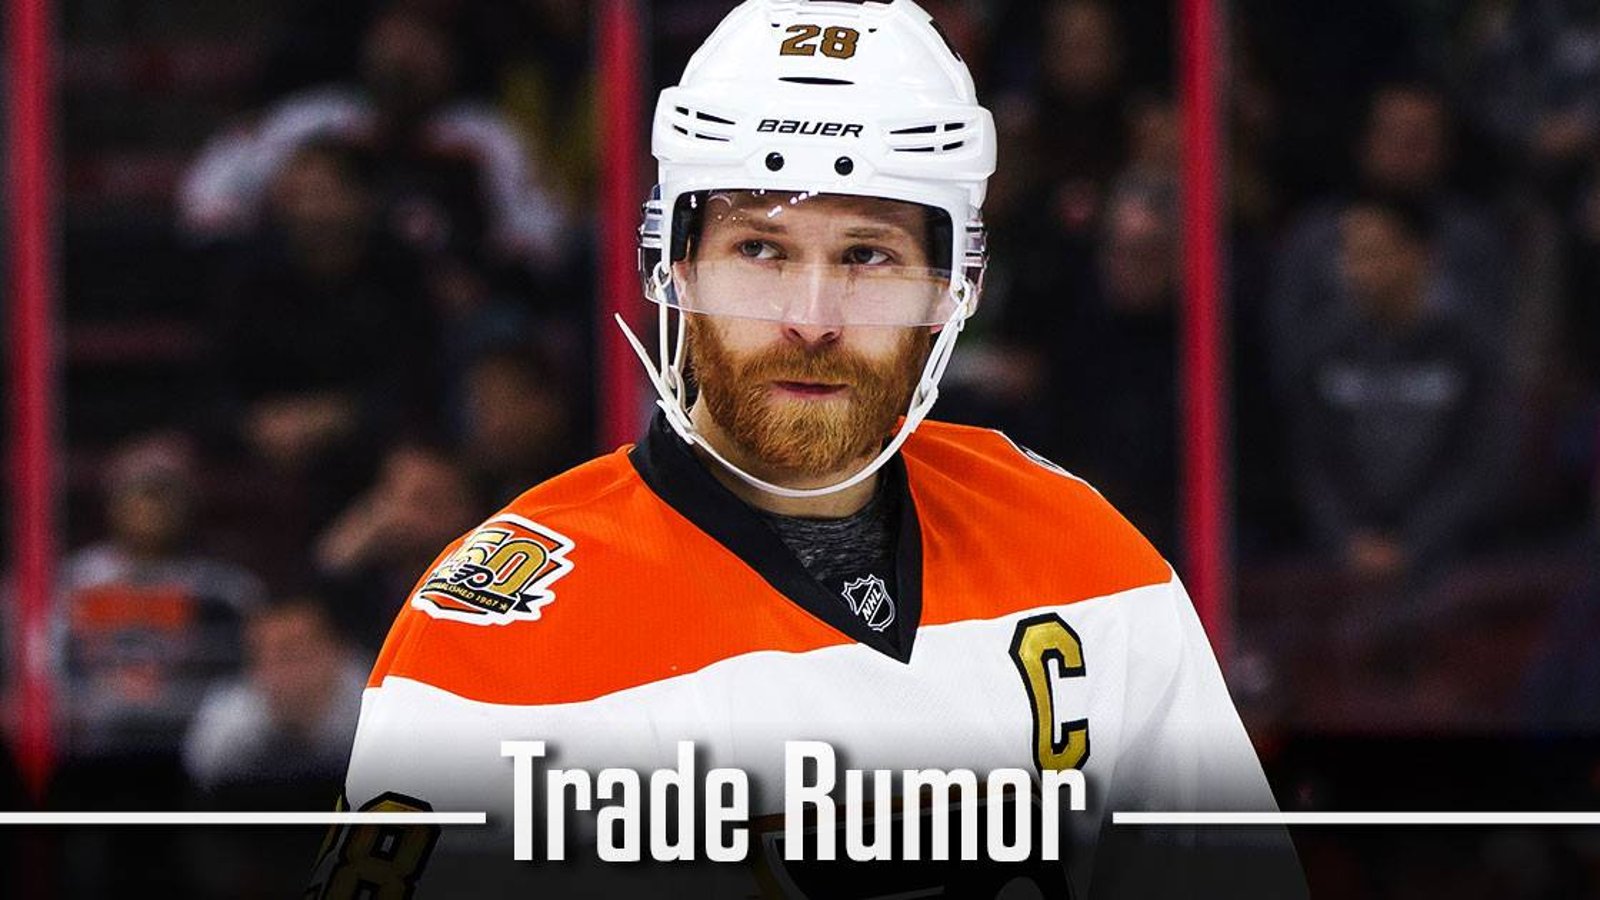 Breaking: Absolutely insane trade rumor involving Flyers star Claude Giroux.